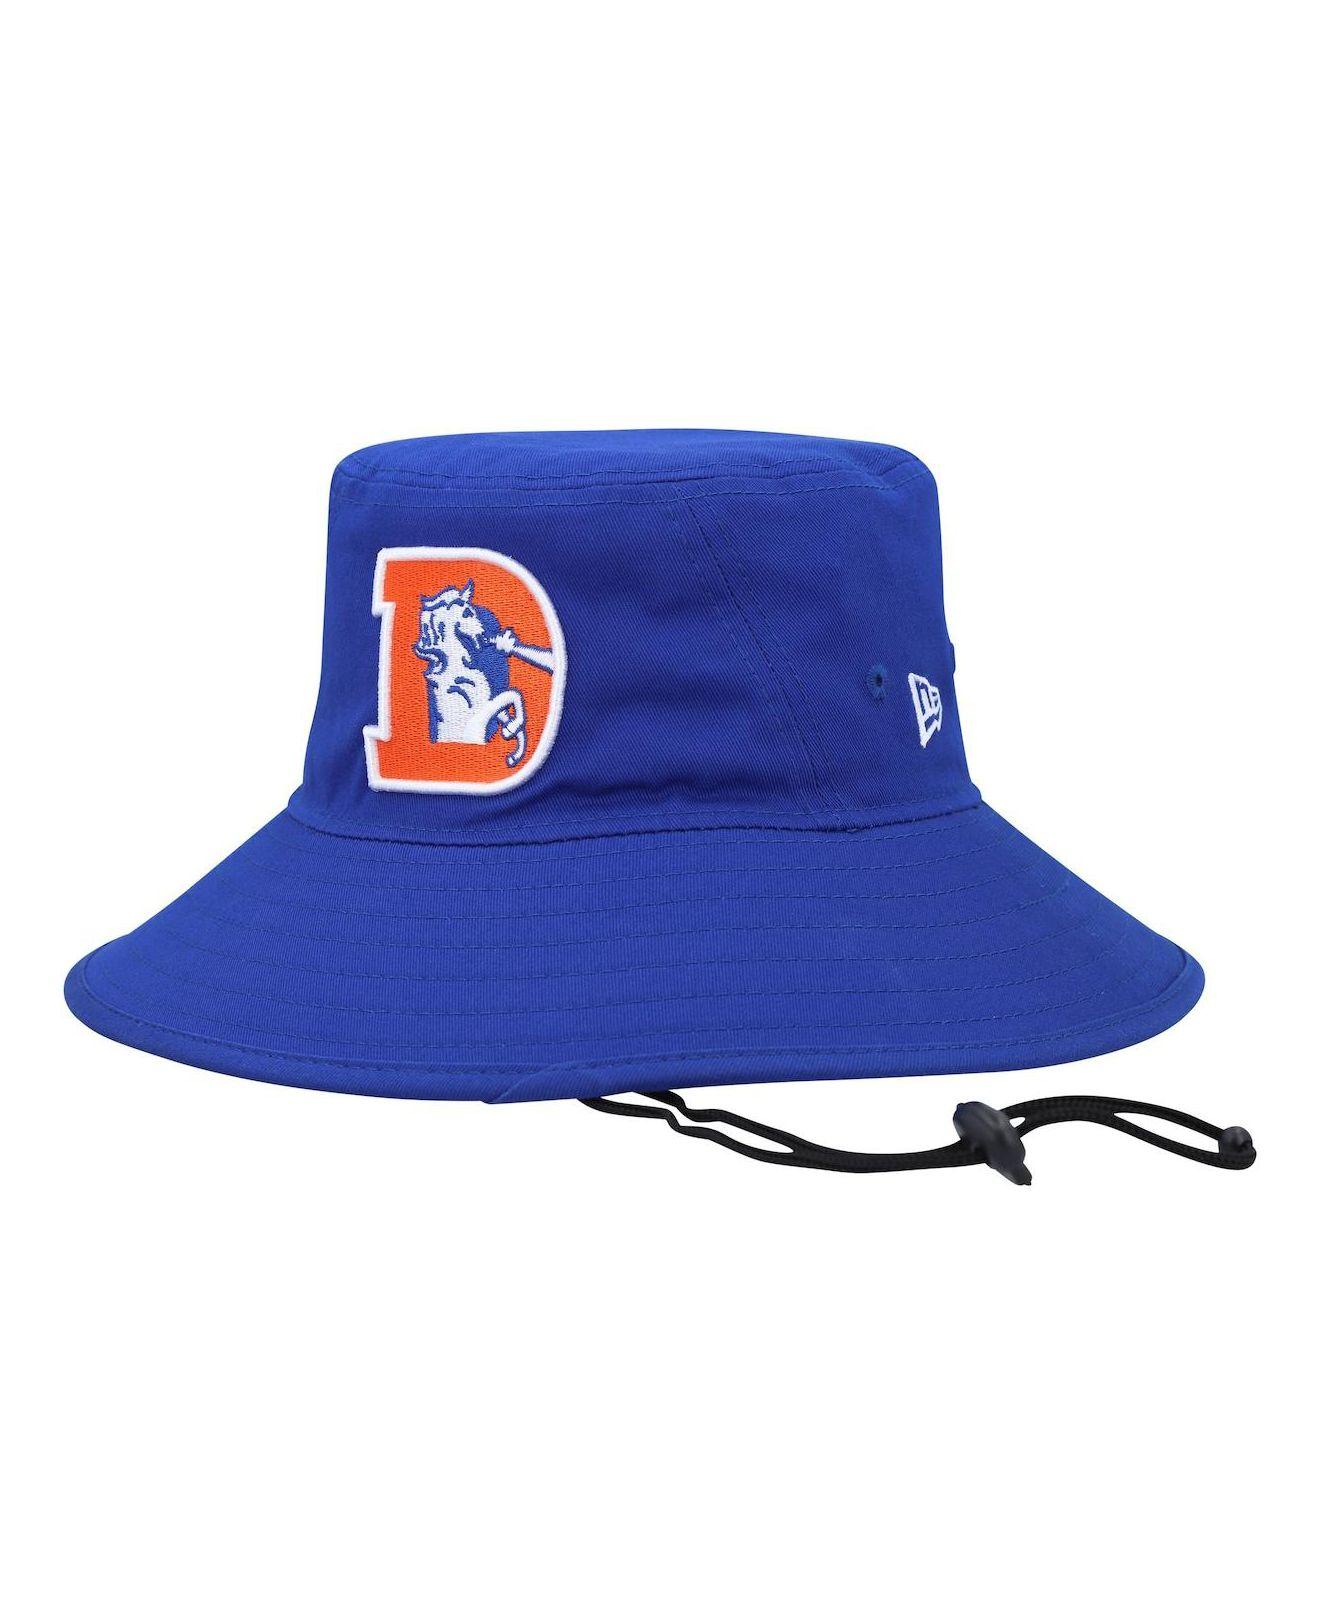 New Era Men's Denver Broncos Training Camp White Panama Bucket Hat